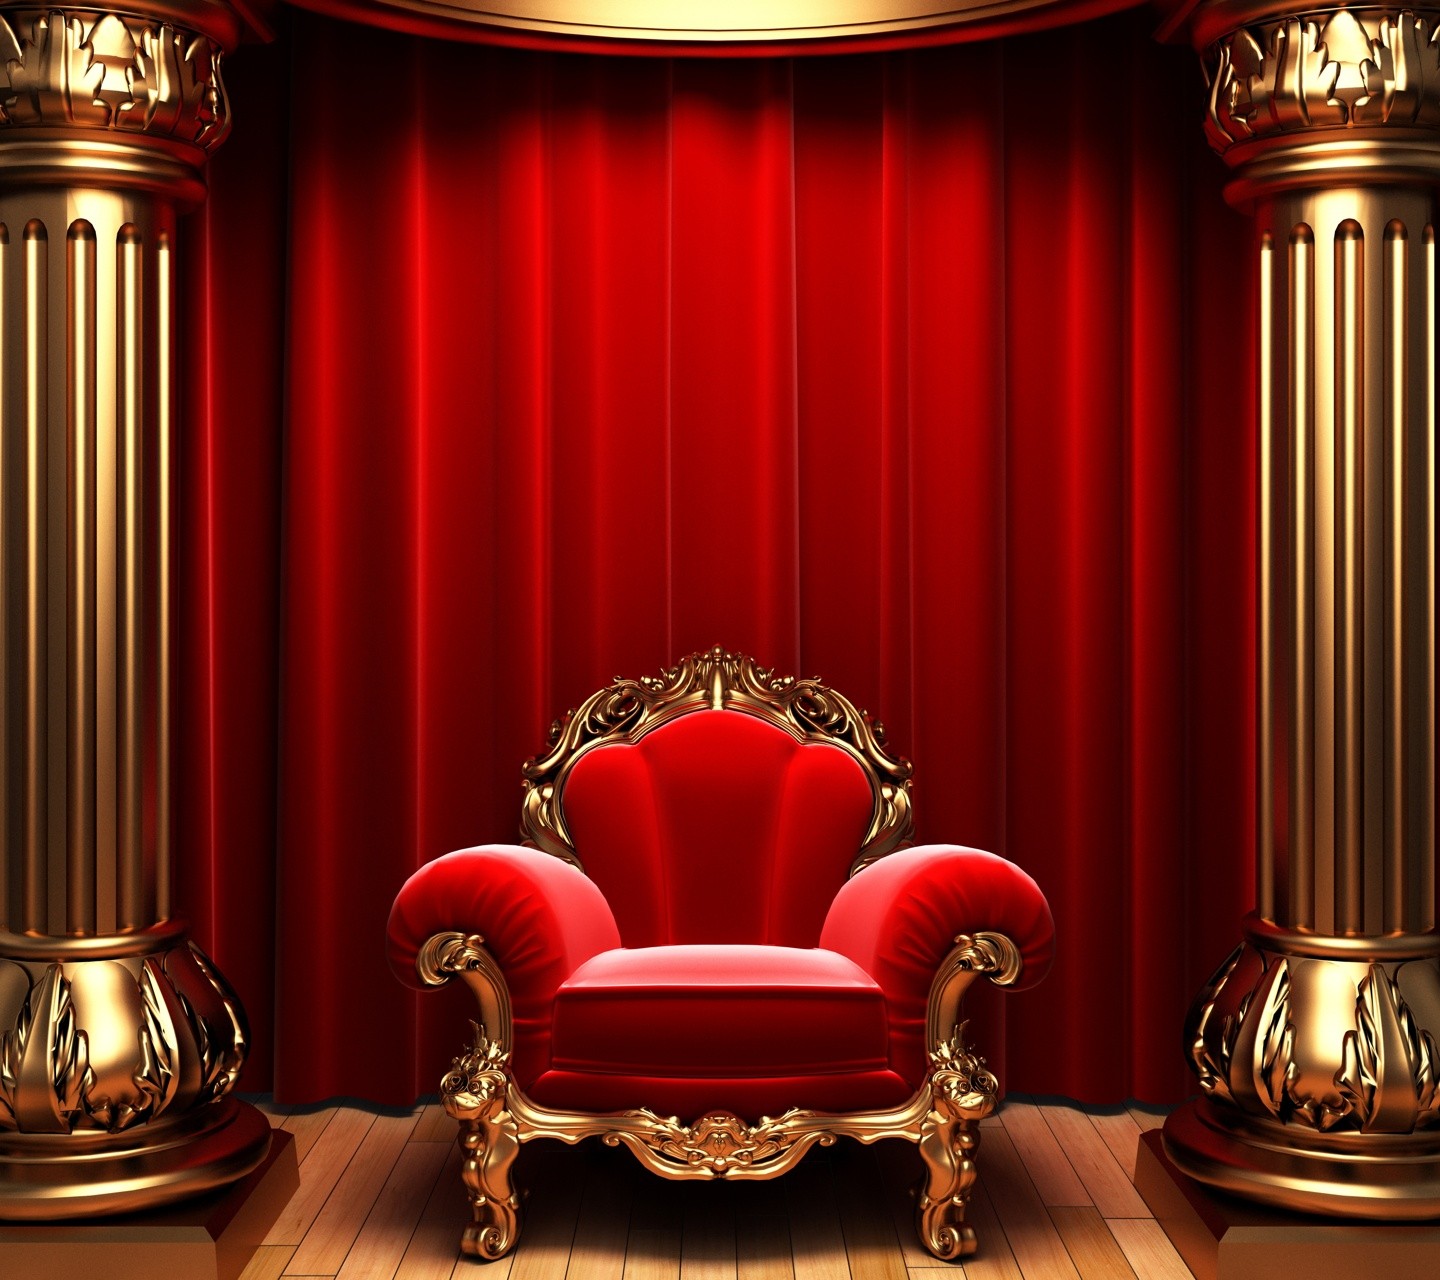 chair wallpaper hd,curtain,interior design,window treatment,room,furniture